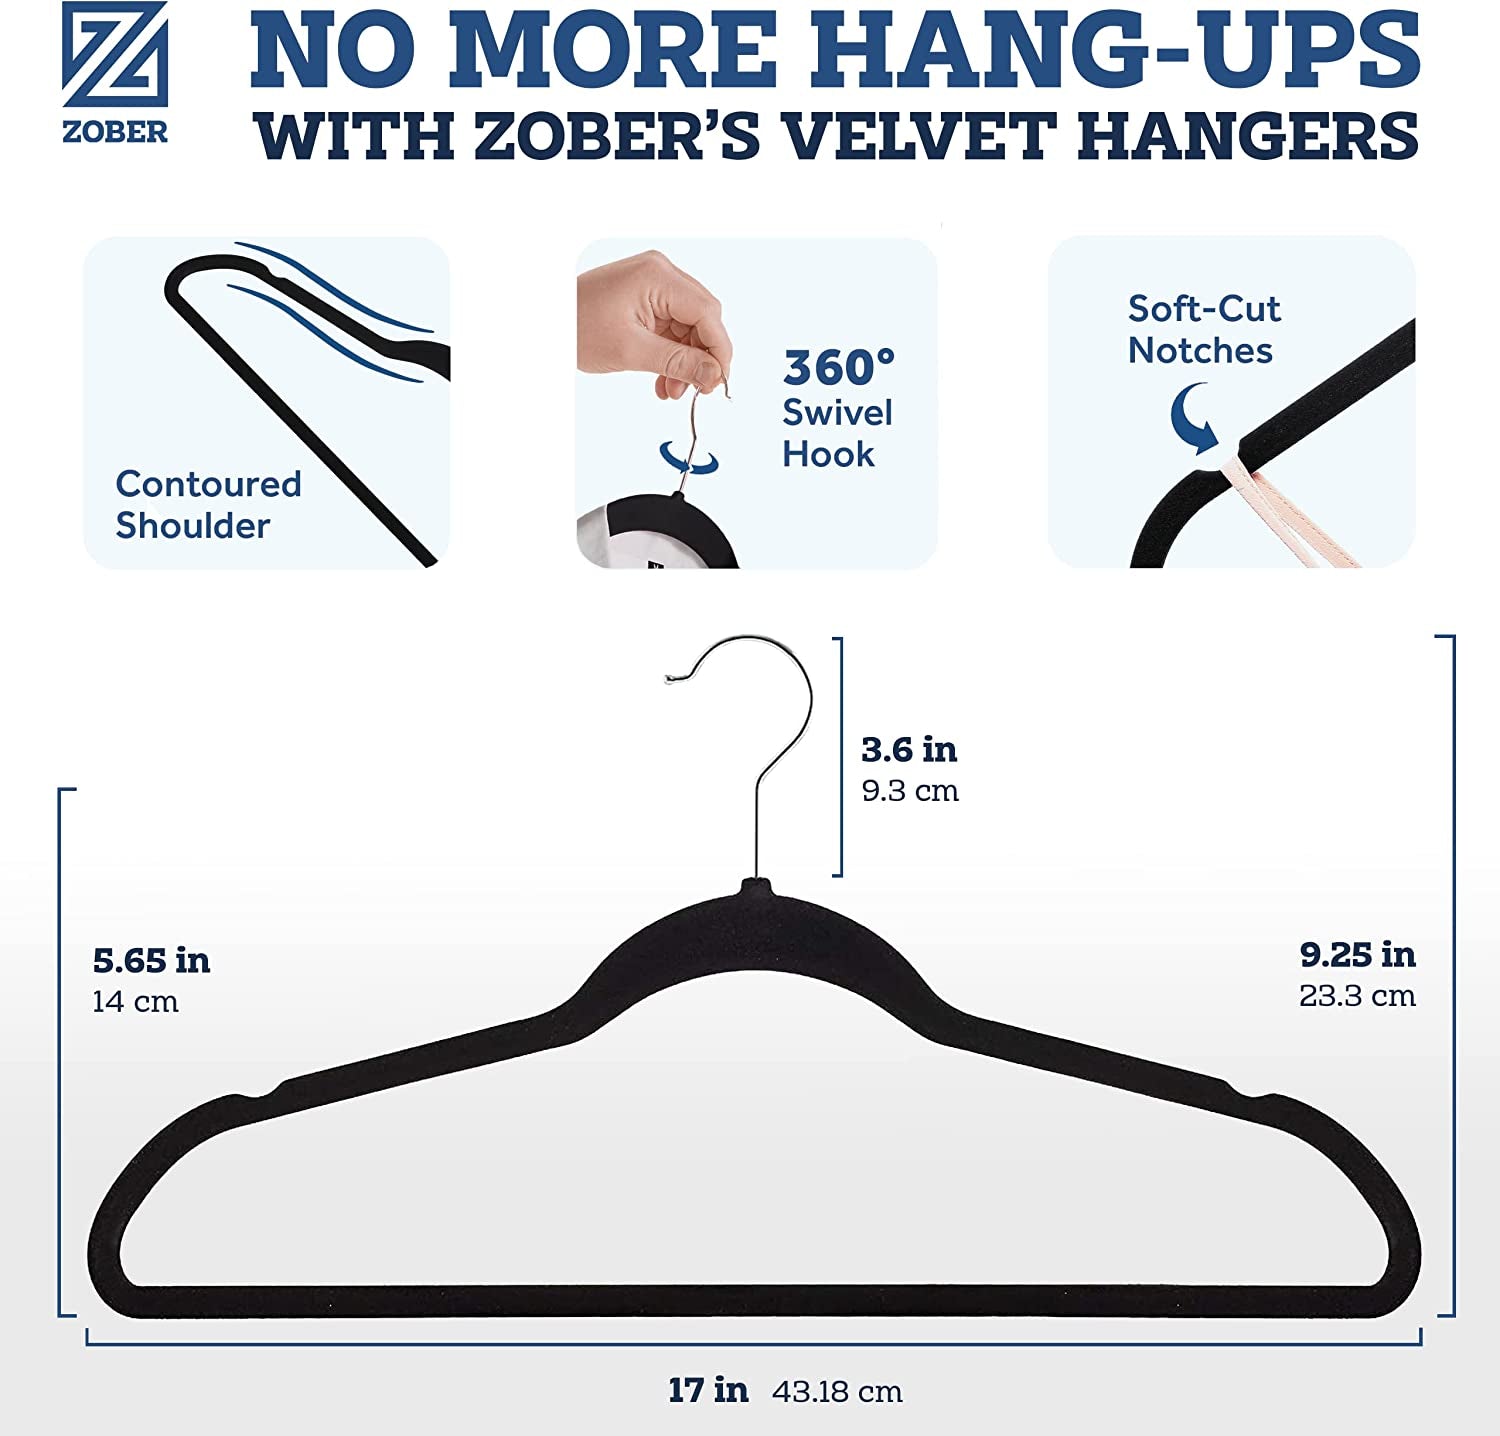 Zober Velvet Hangers 20 Pack - Black Hangers for Coats, Pants & Dress Clothes - Non Slip Clothes Hanger Set W/ 360 Degree Swivel, Holds up to 10 Lbs - Strong Felt Hangers for Clothing